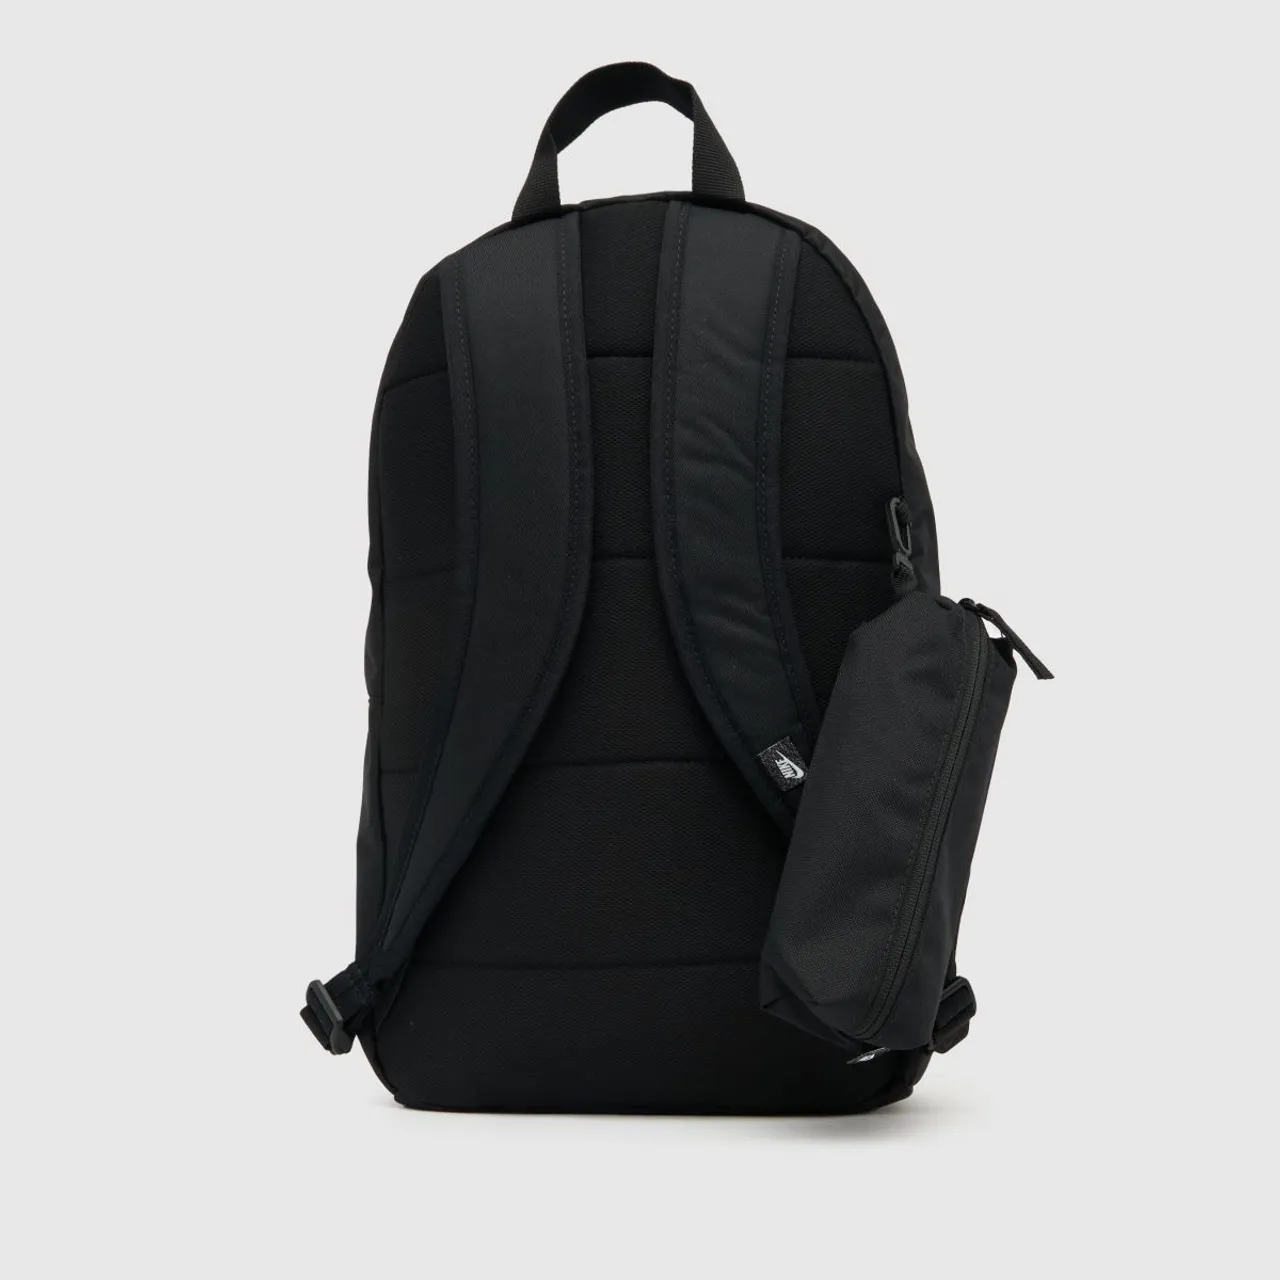 Nike Black & White Kids Elemental Backpack, Size: One Size